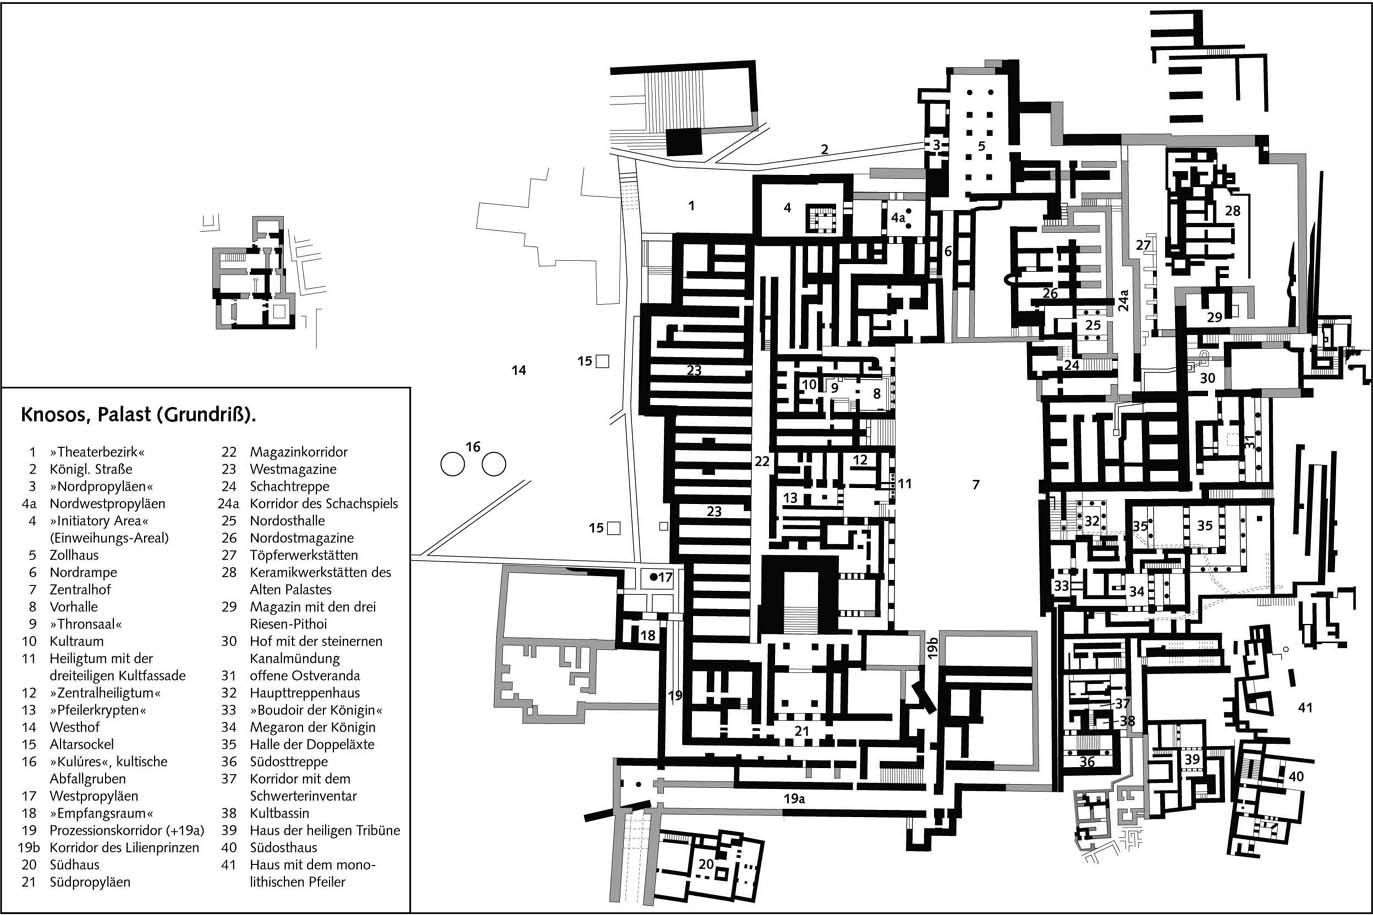 Кносс, дворец - План здания